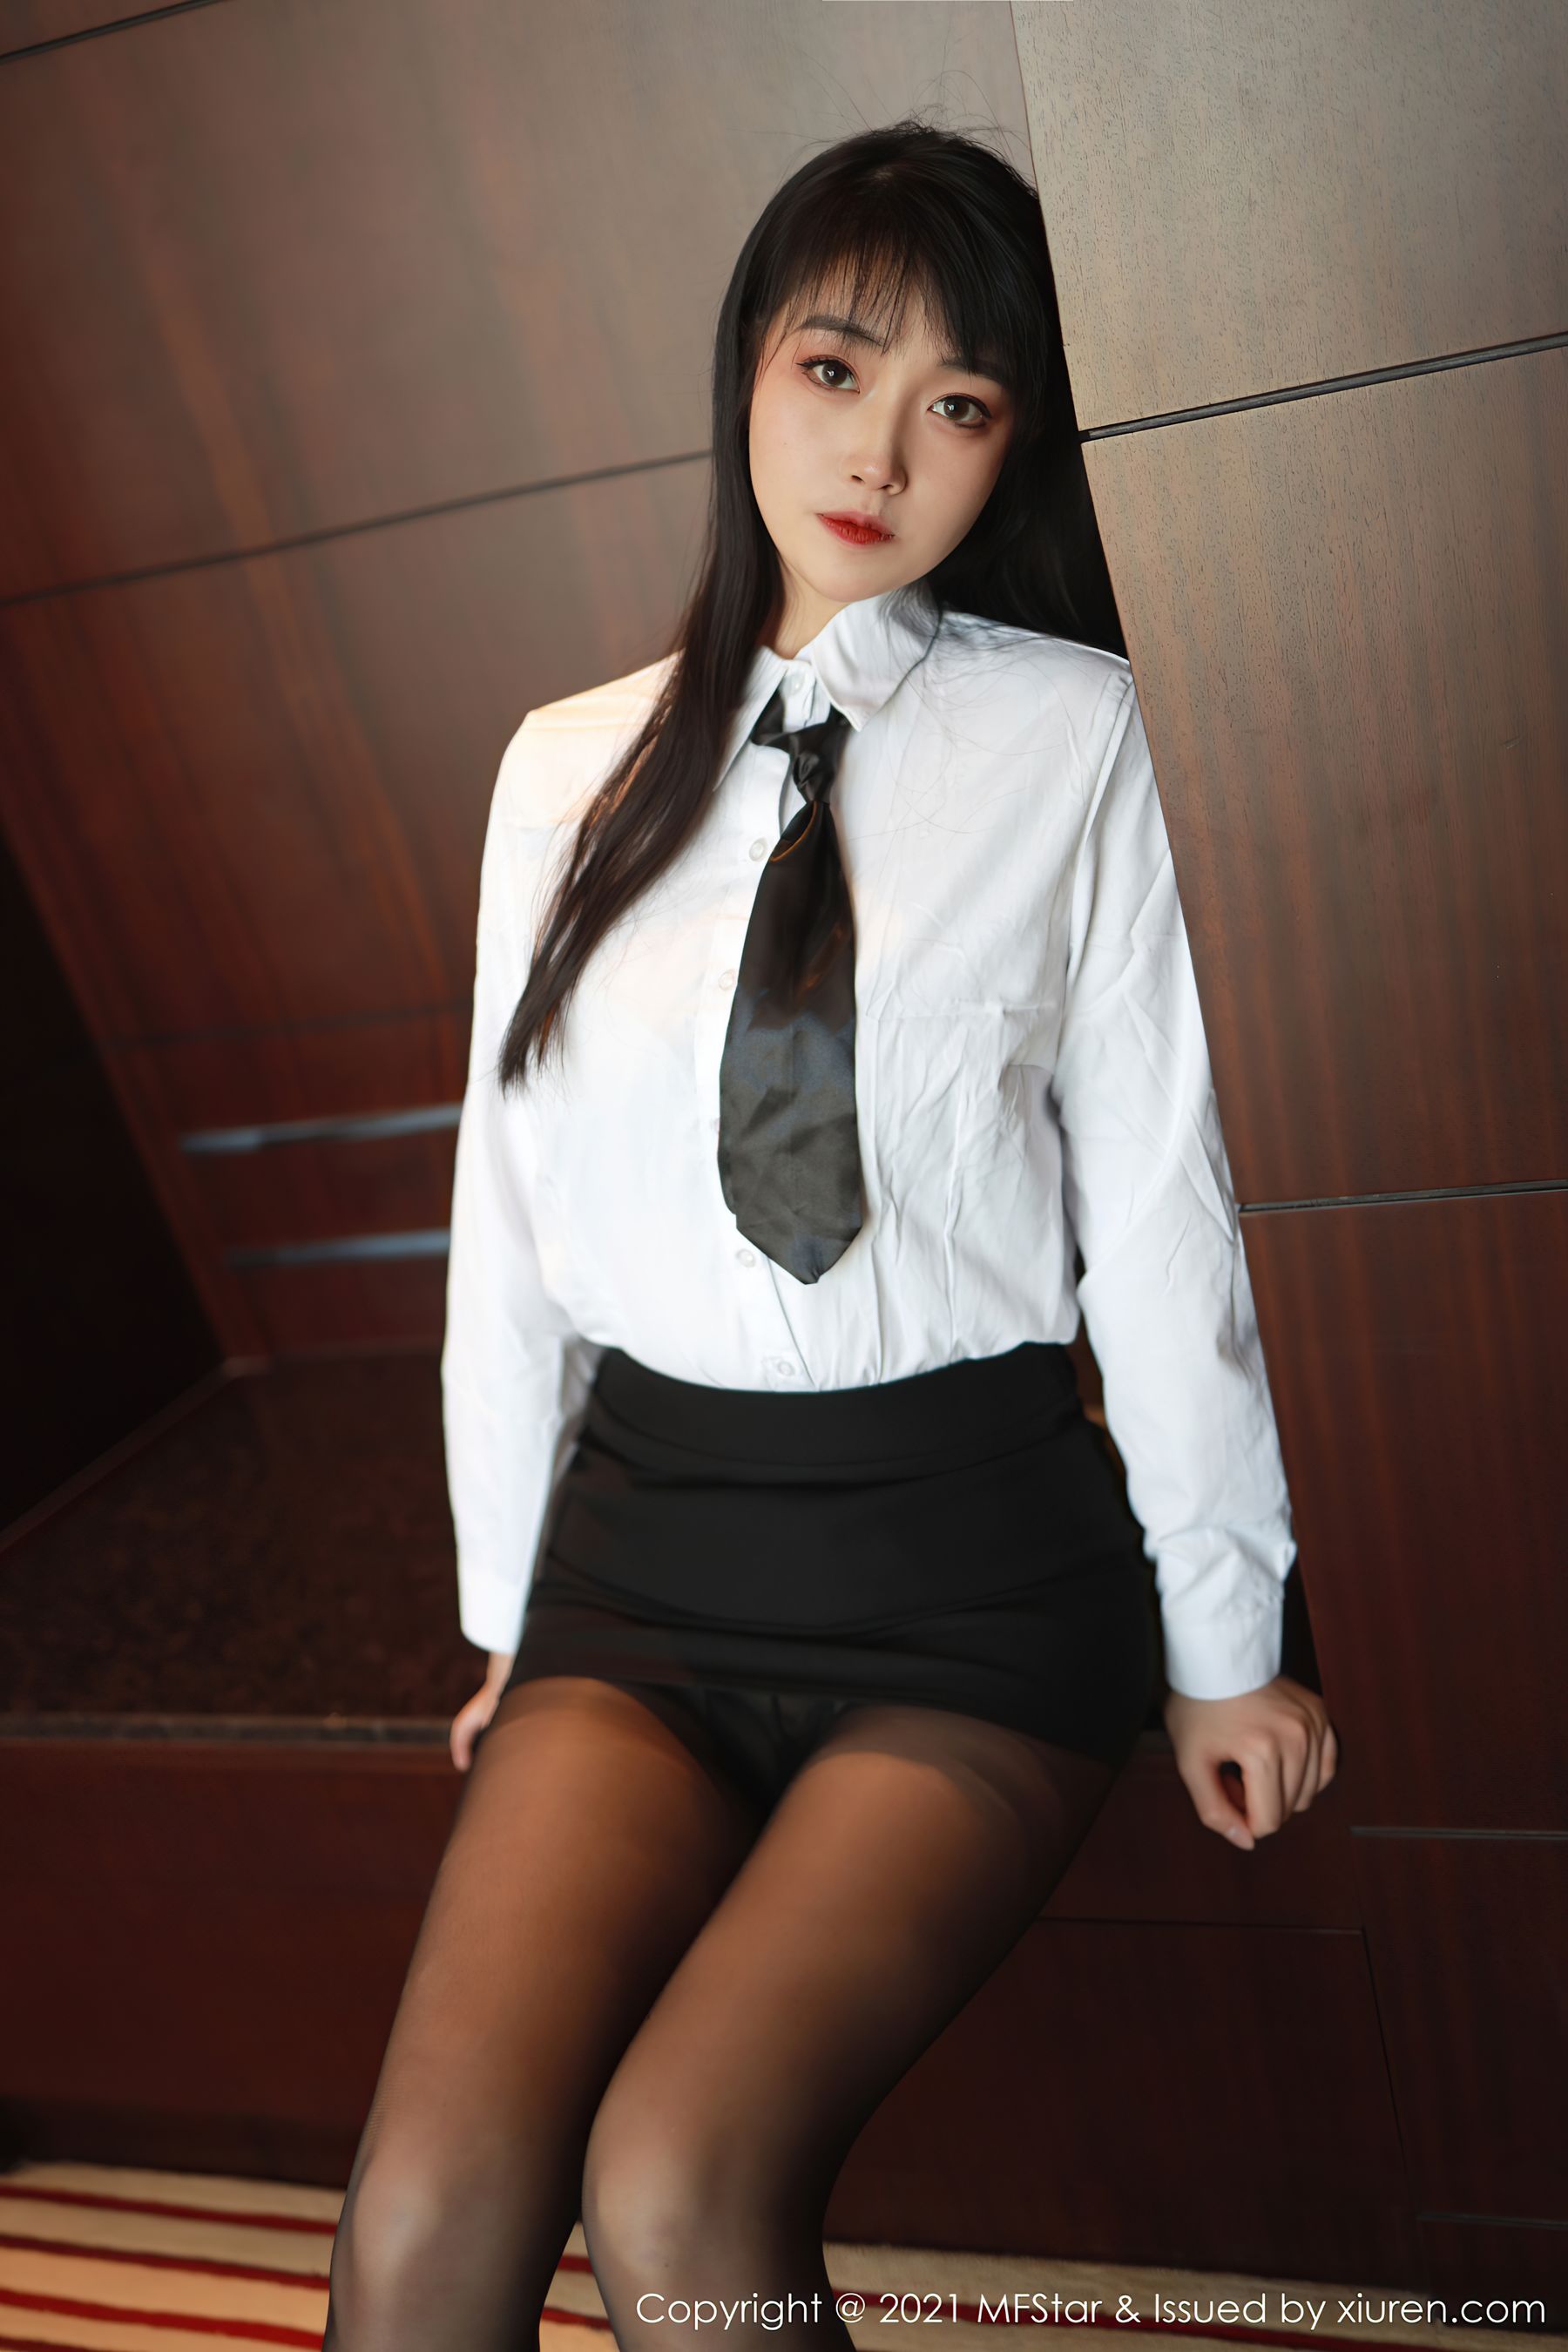 [Model Academy Mfstar] Vol.449 Pot Bread YOU – Classic White Shirt Black Skirt Workplace Secret Occupation OL Series